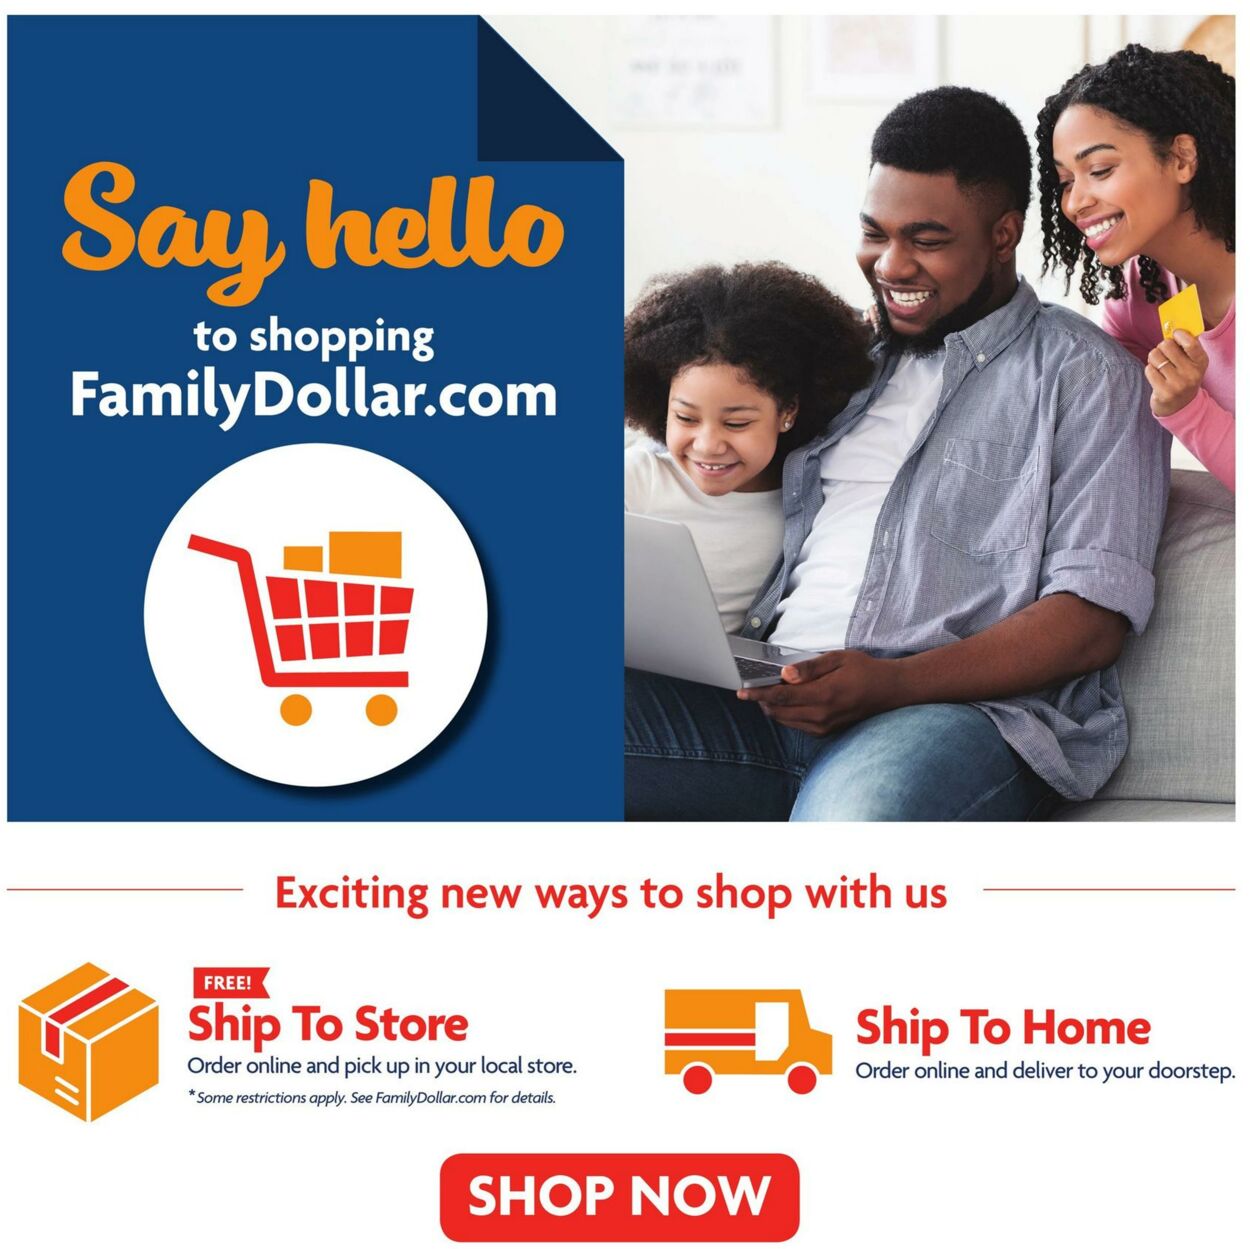 Weekly ad Family Dollar 02/18/2024 - 02/24/2024